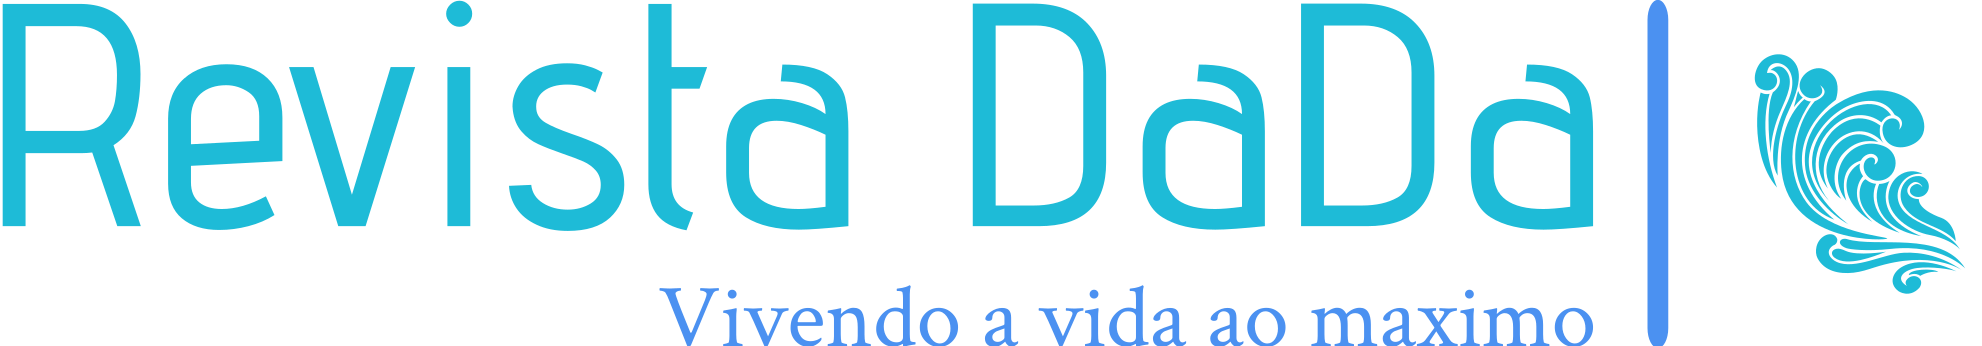 Revista Dada